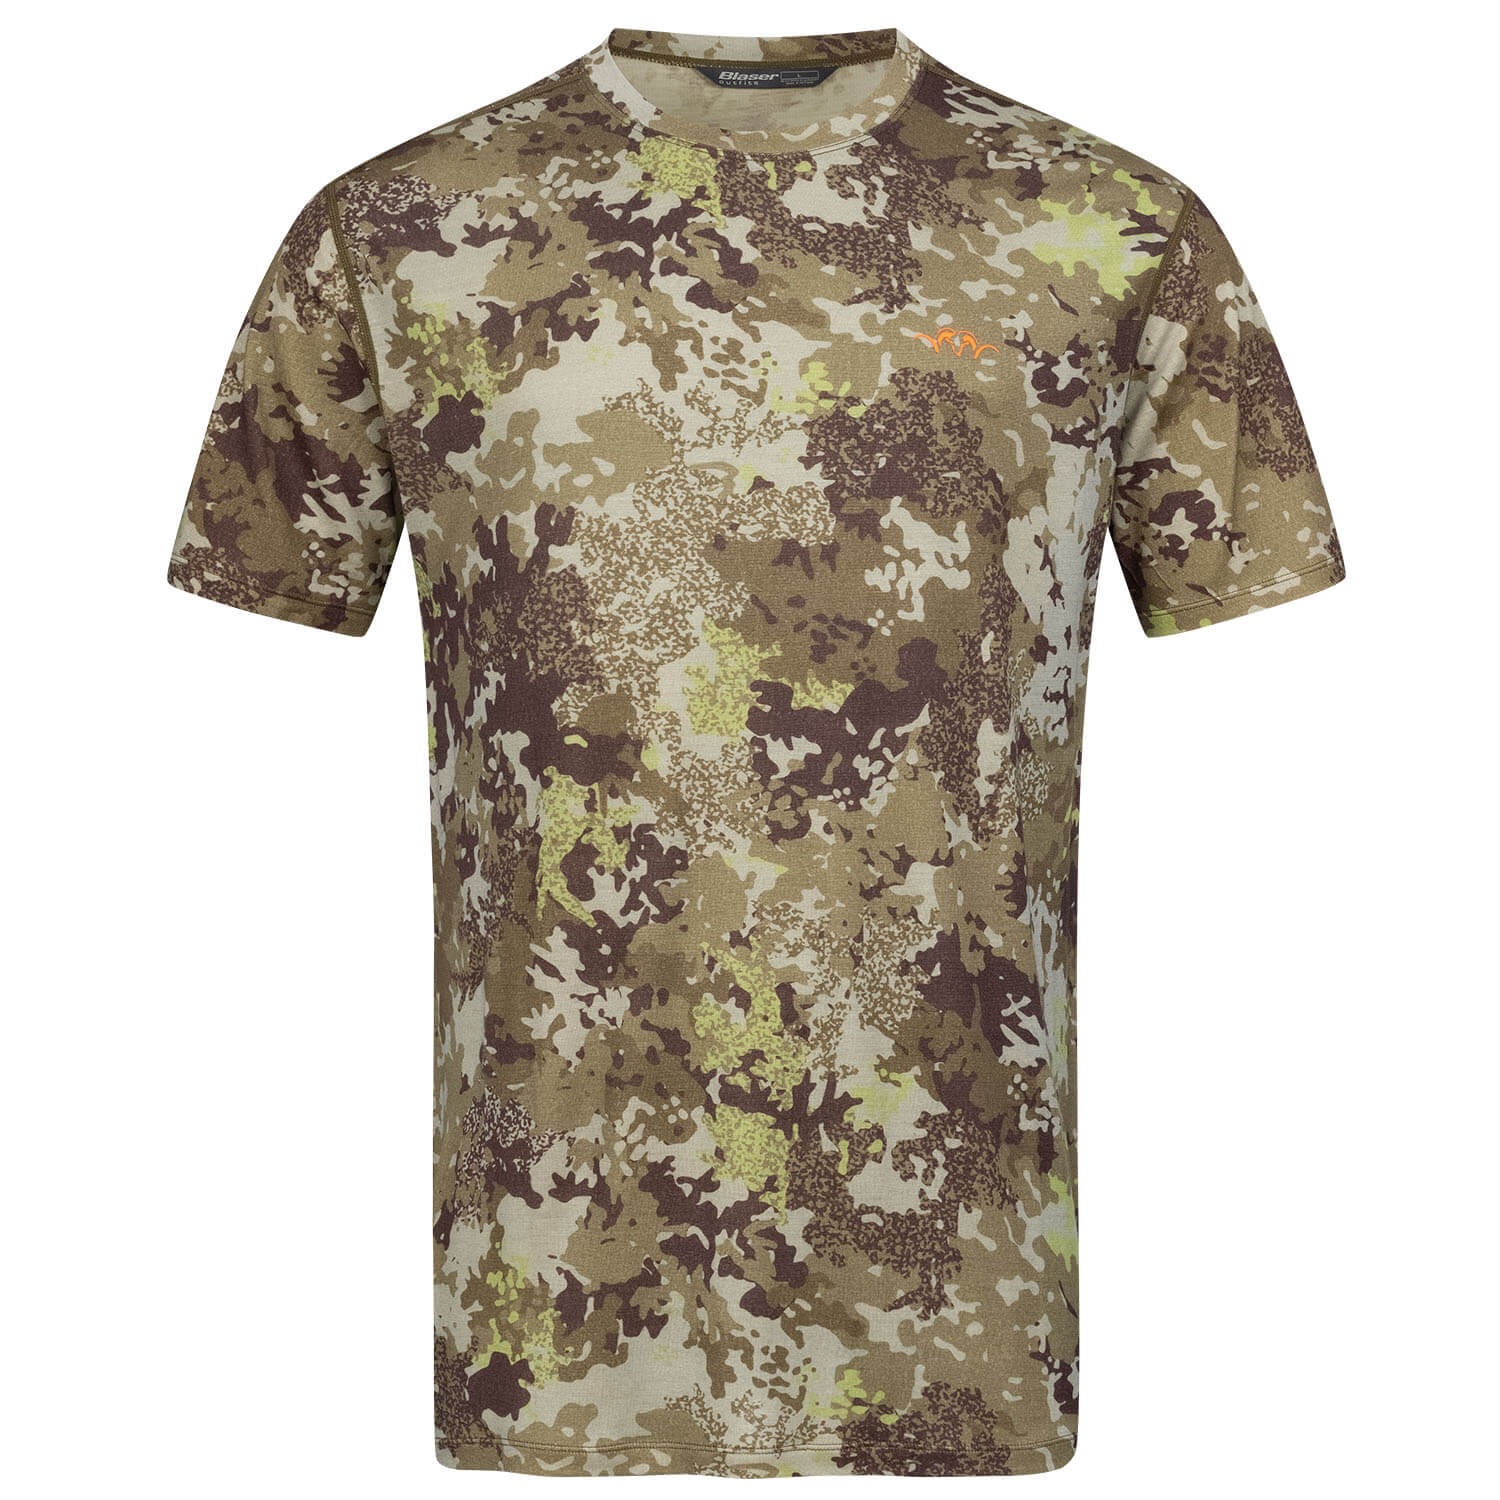  Blaser HunTec T-shirt Merino Base 160 T (Camo) - Camouflageshirts